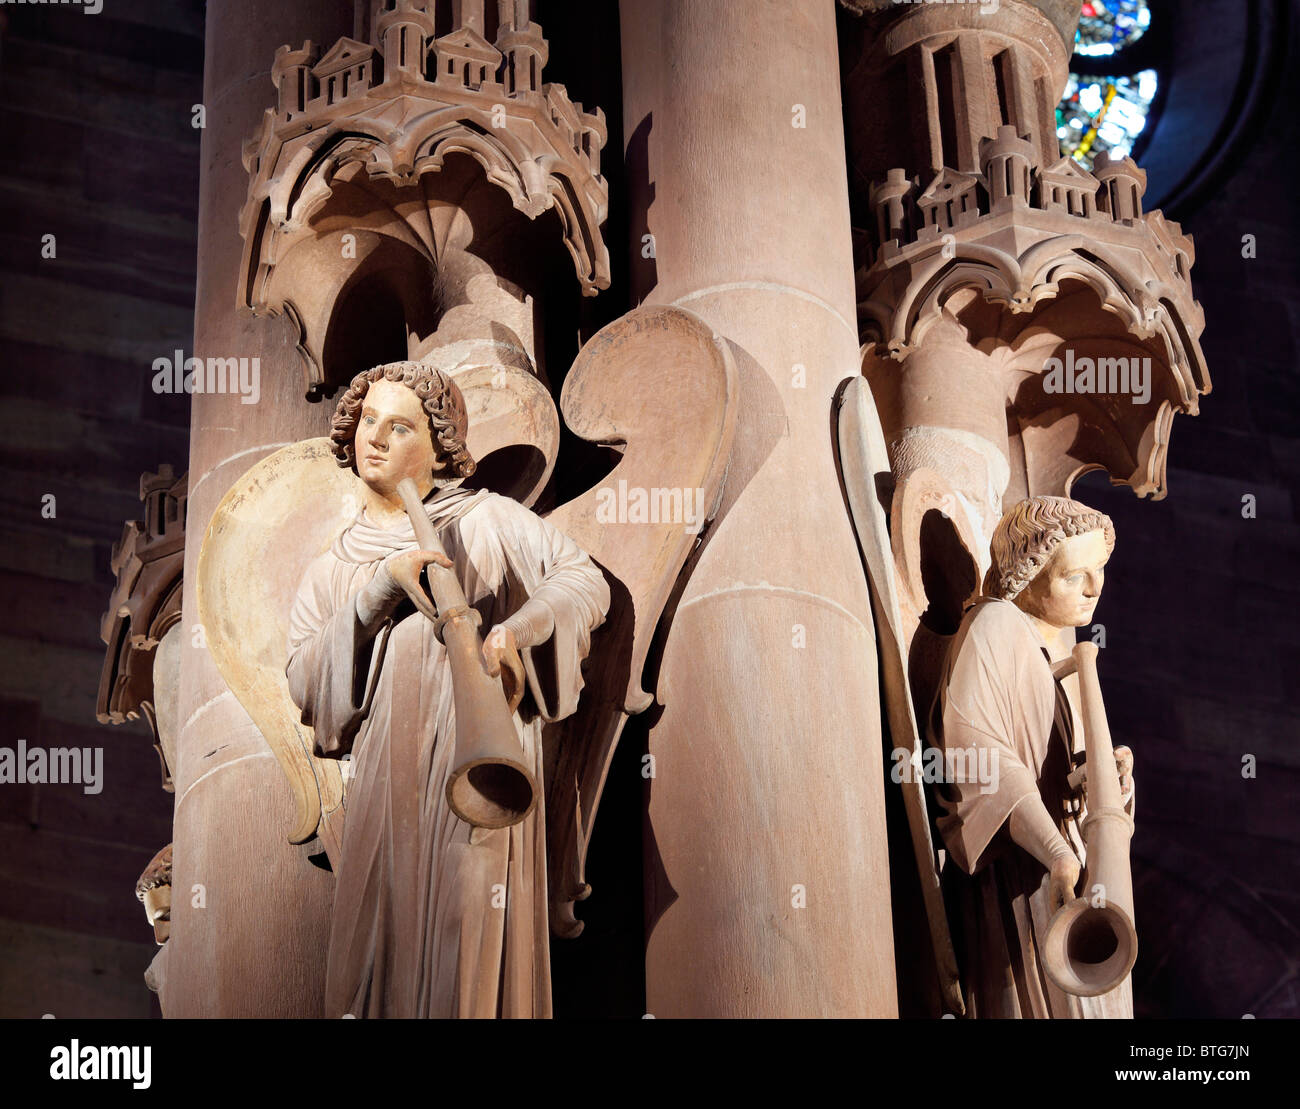 Pilier des Anges, la cathédrale de Strasbourg, Strasbourg, Alsace, France Banque D'Images